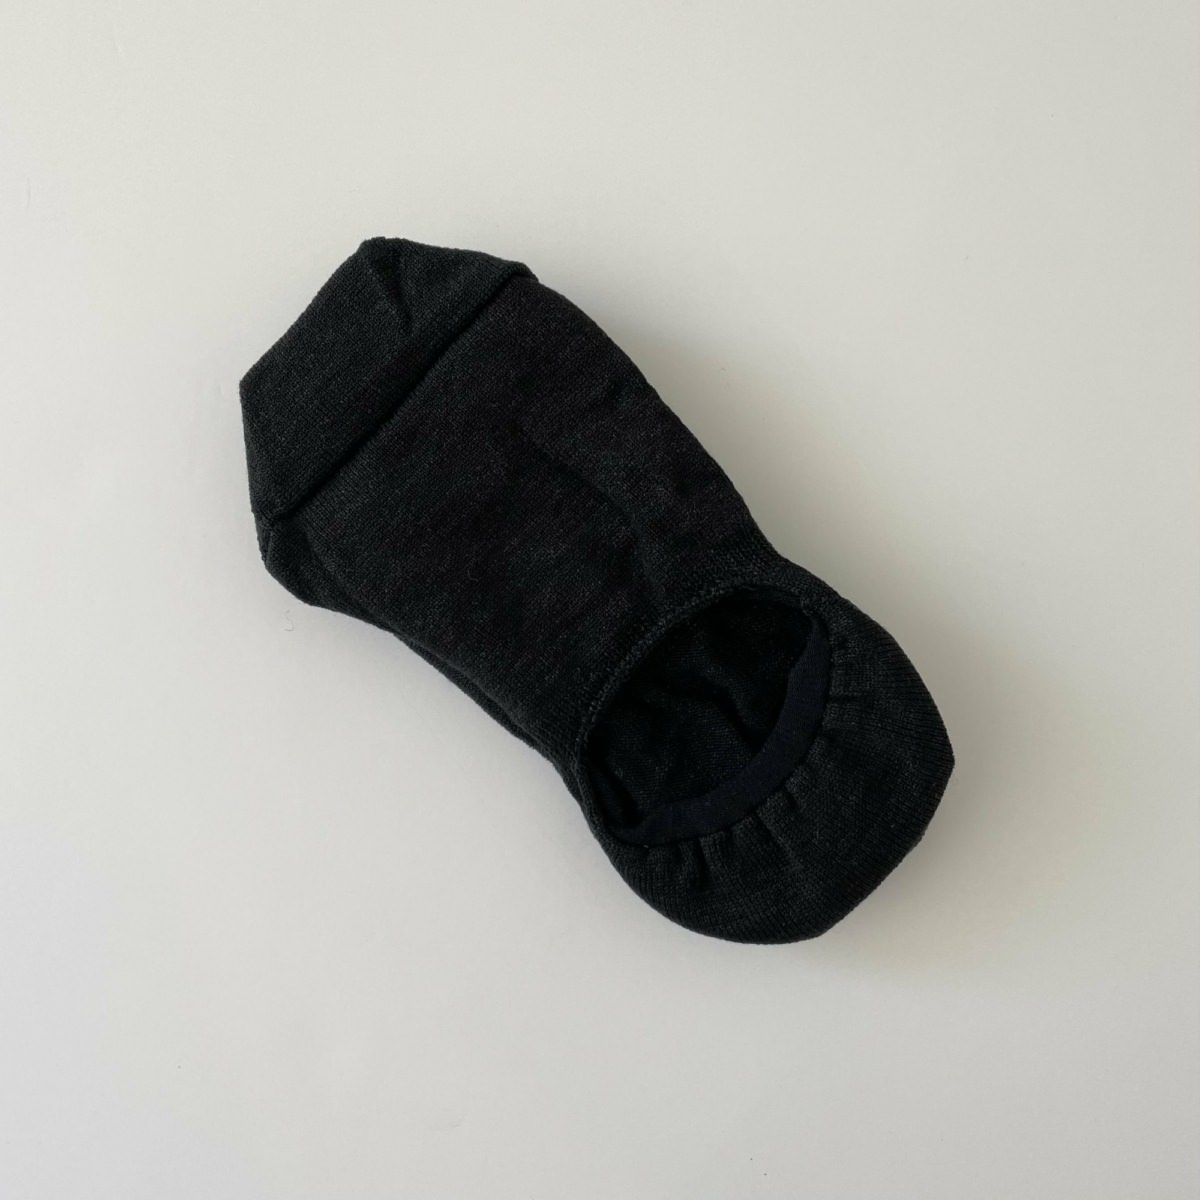 KARMAN LINE CARINA / Cover socks / Black